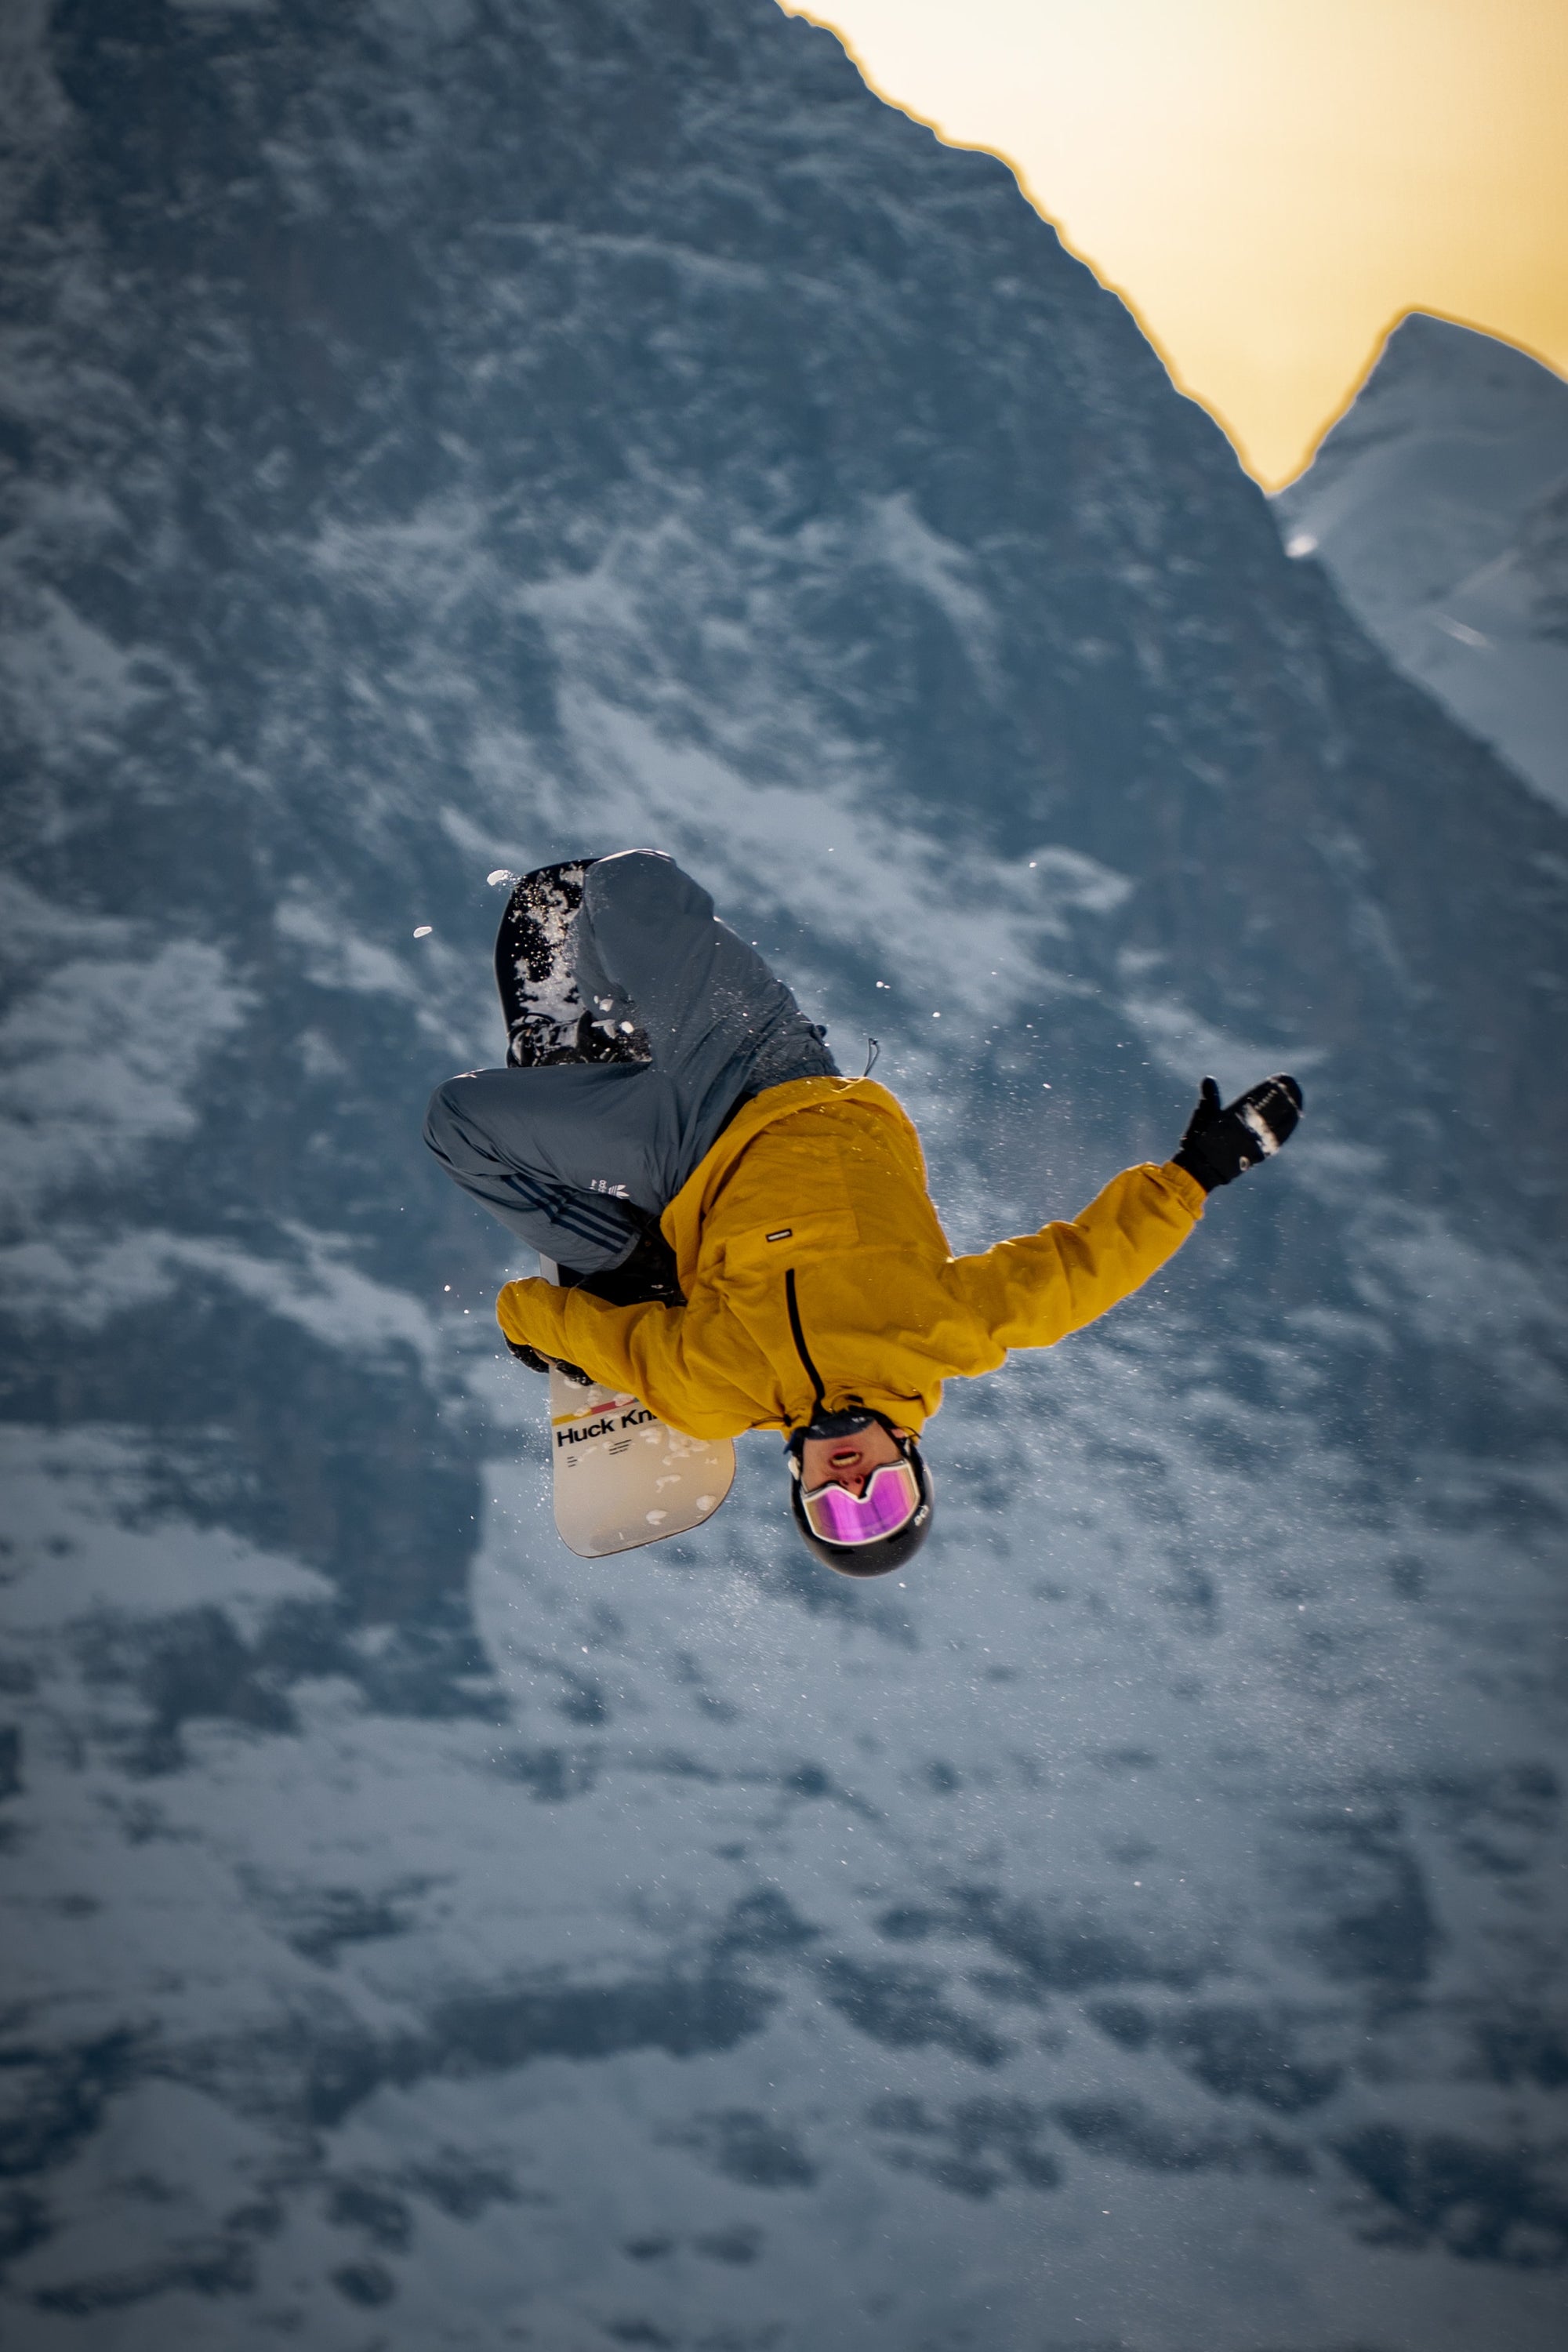 Burton Shaun White Youth Snowboard, 2007 - CrazySnowBoarder Review